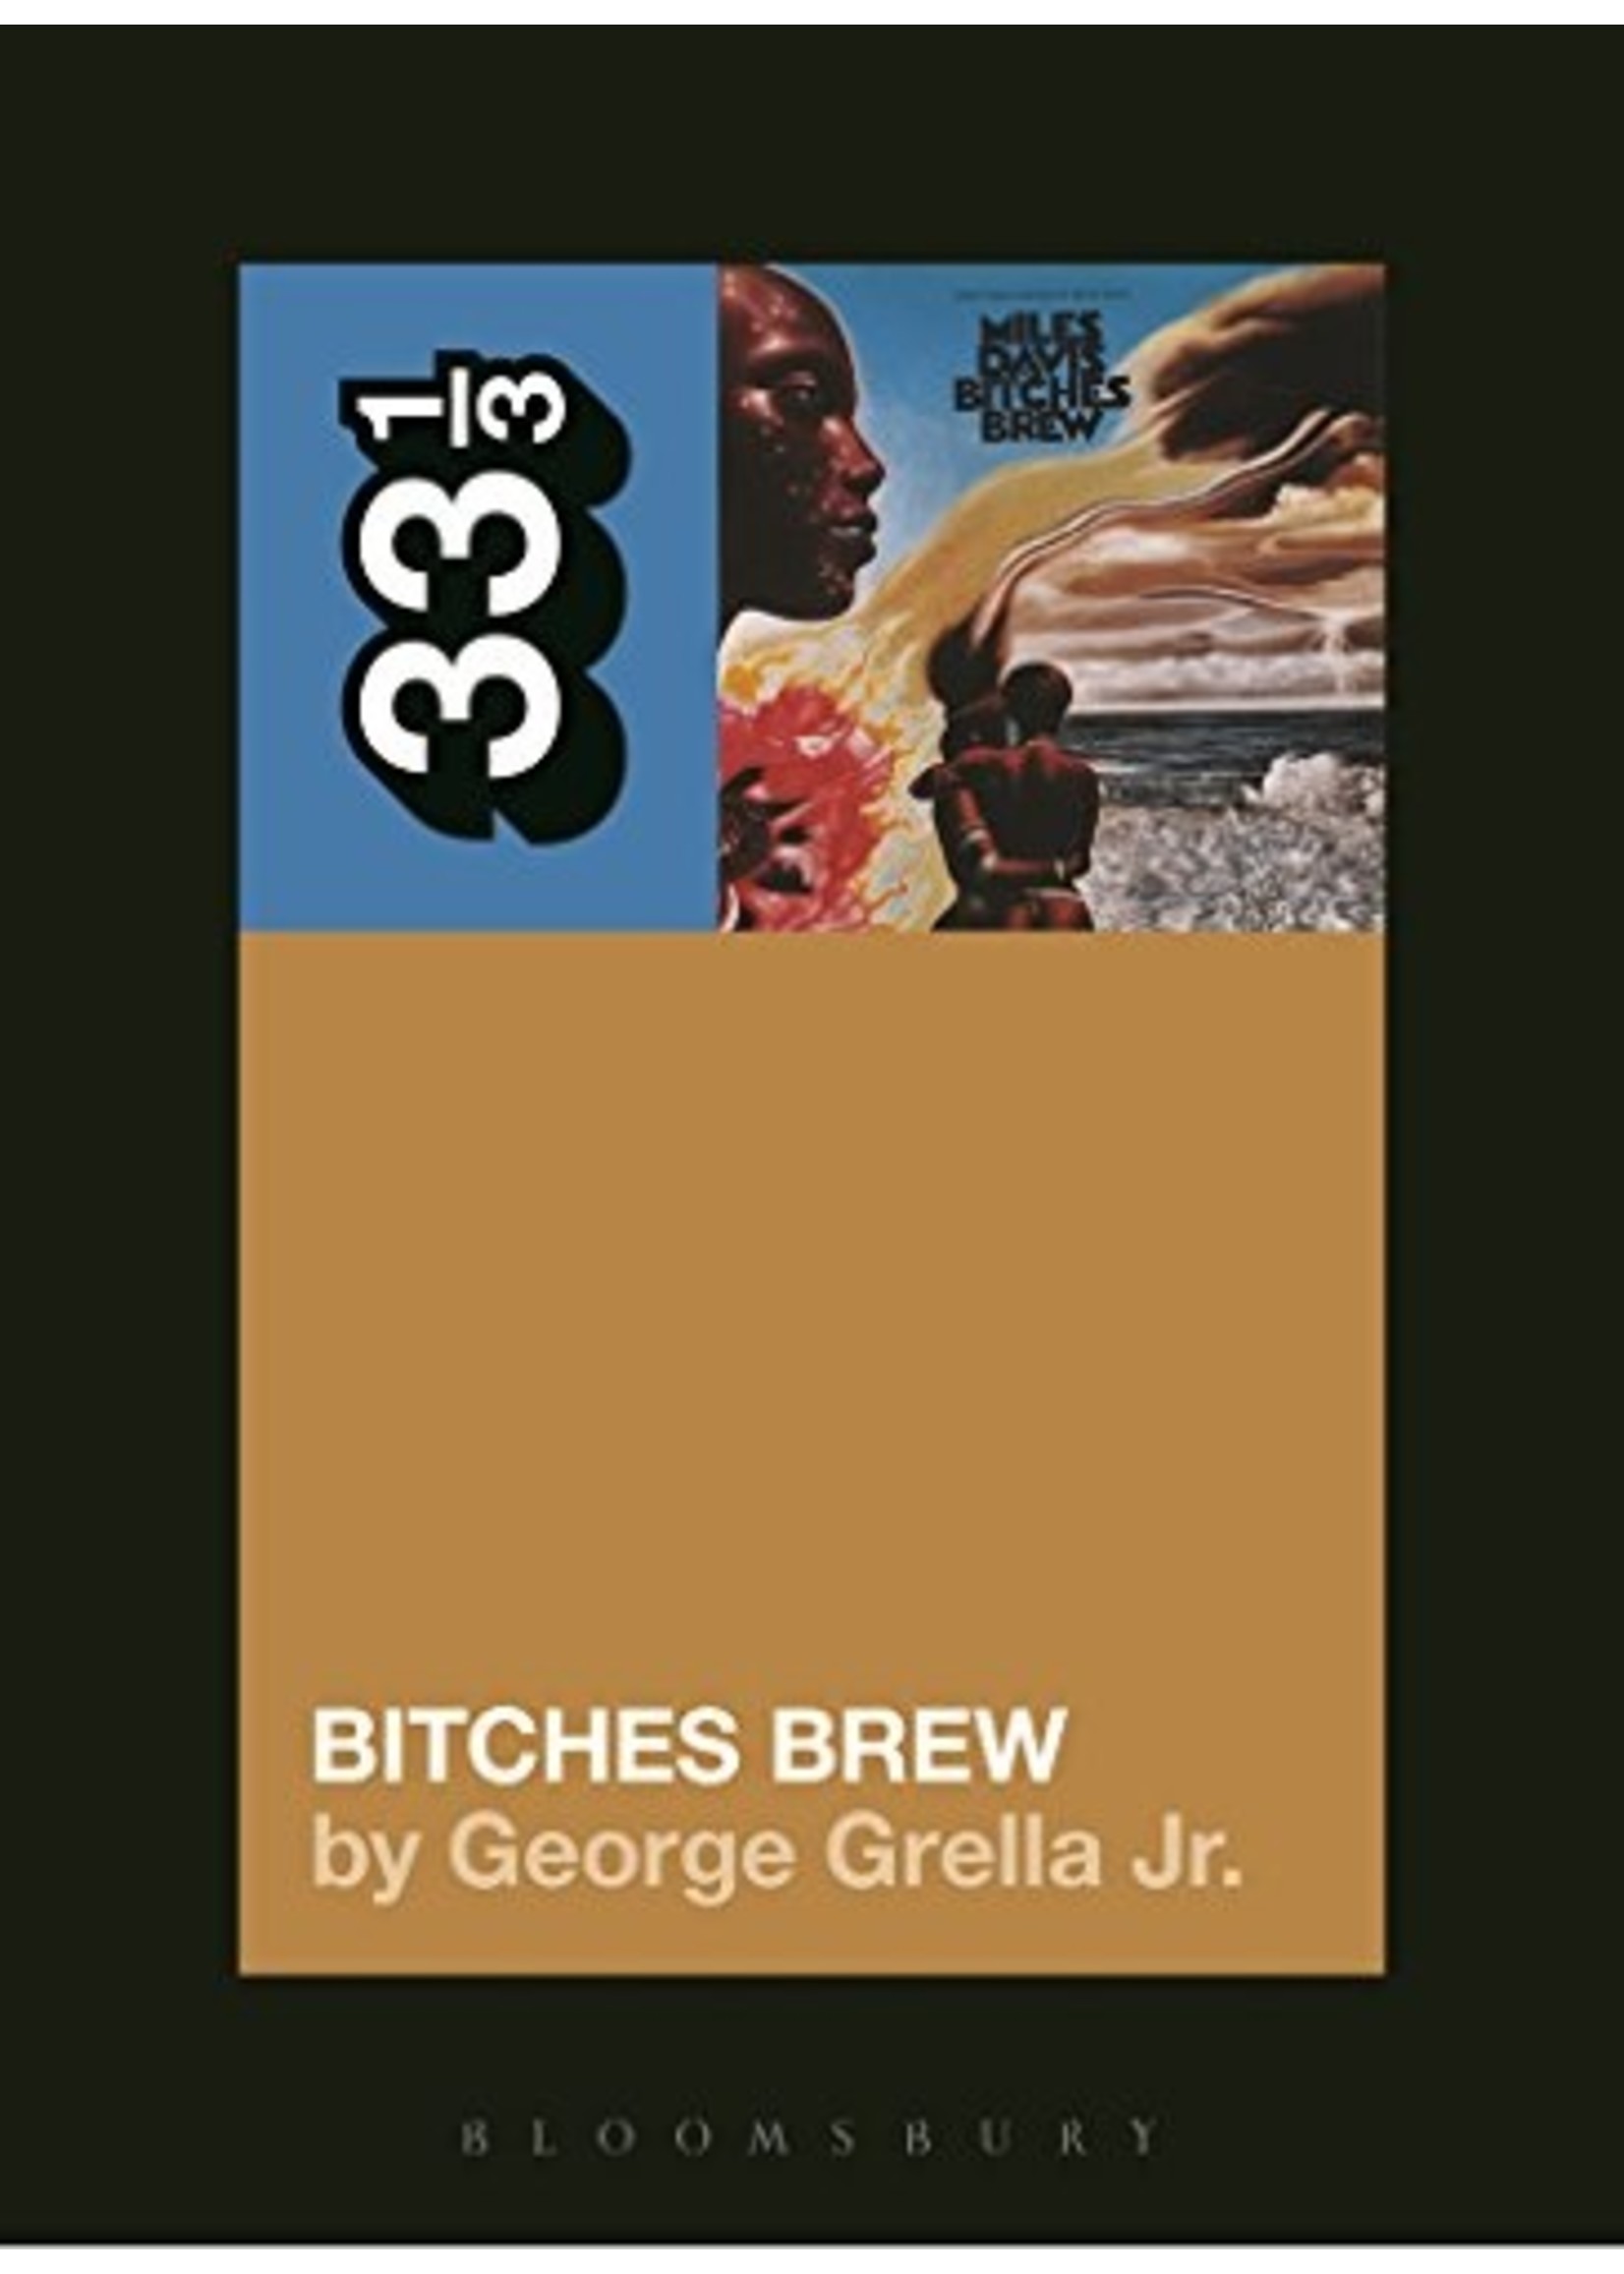 33 1/3 Bitches Brew